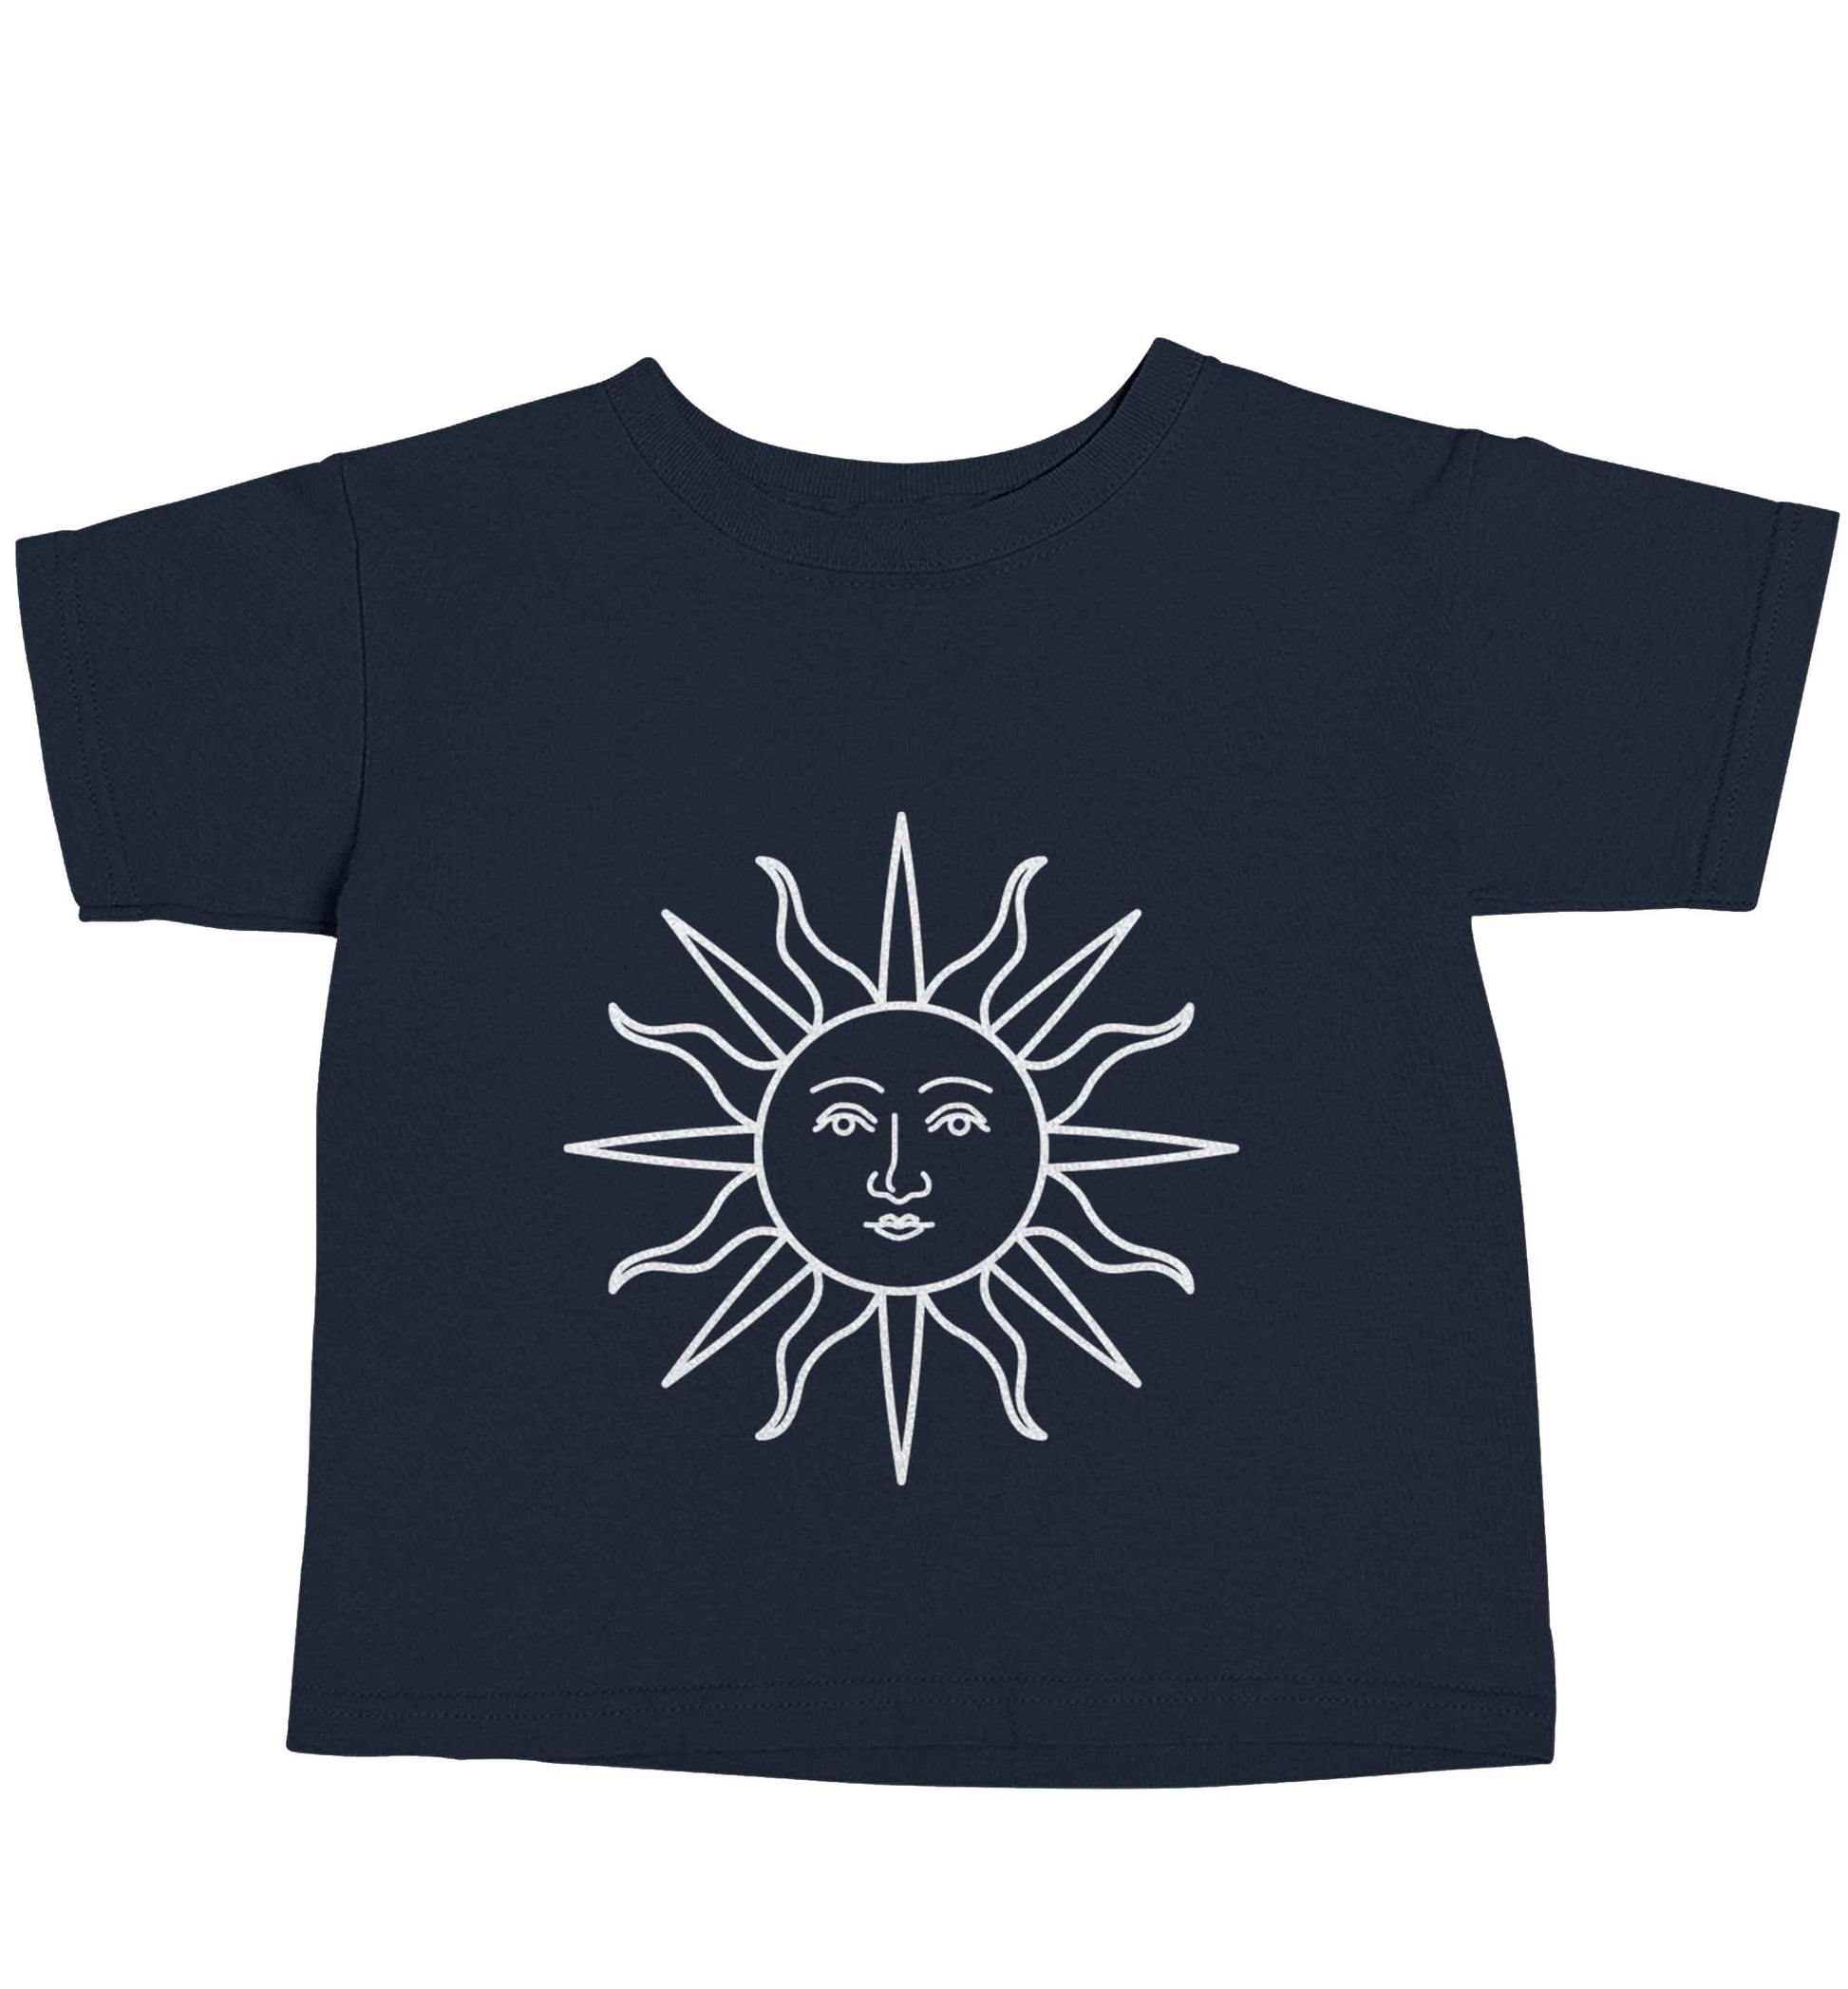 Sun face illustration navy baby toddler Tshirt 2 Years